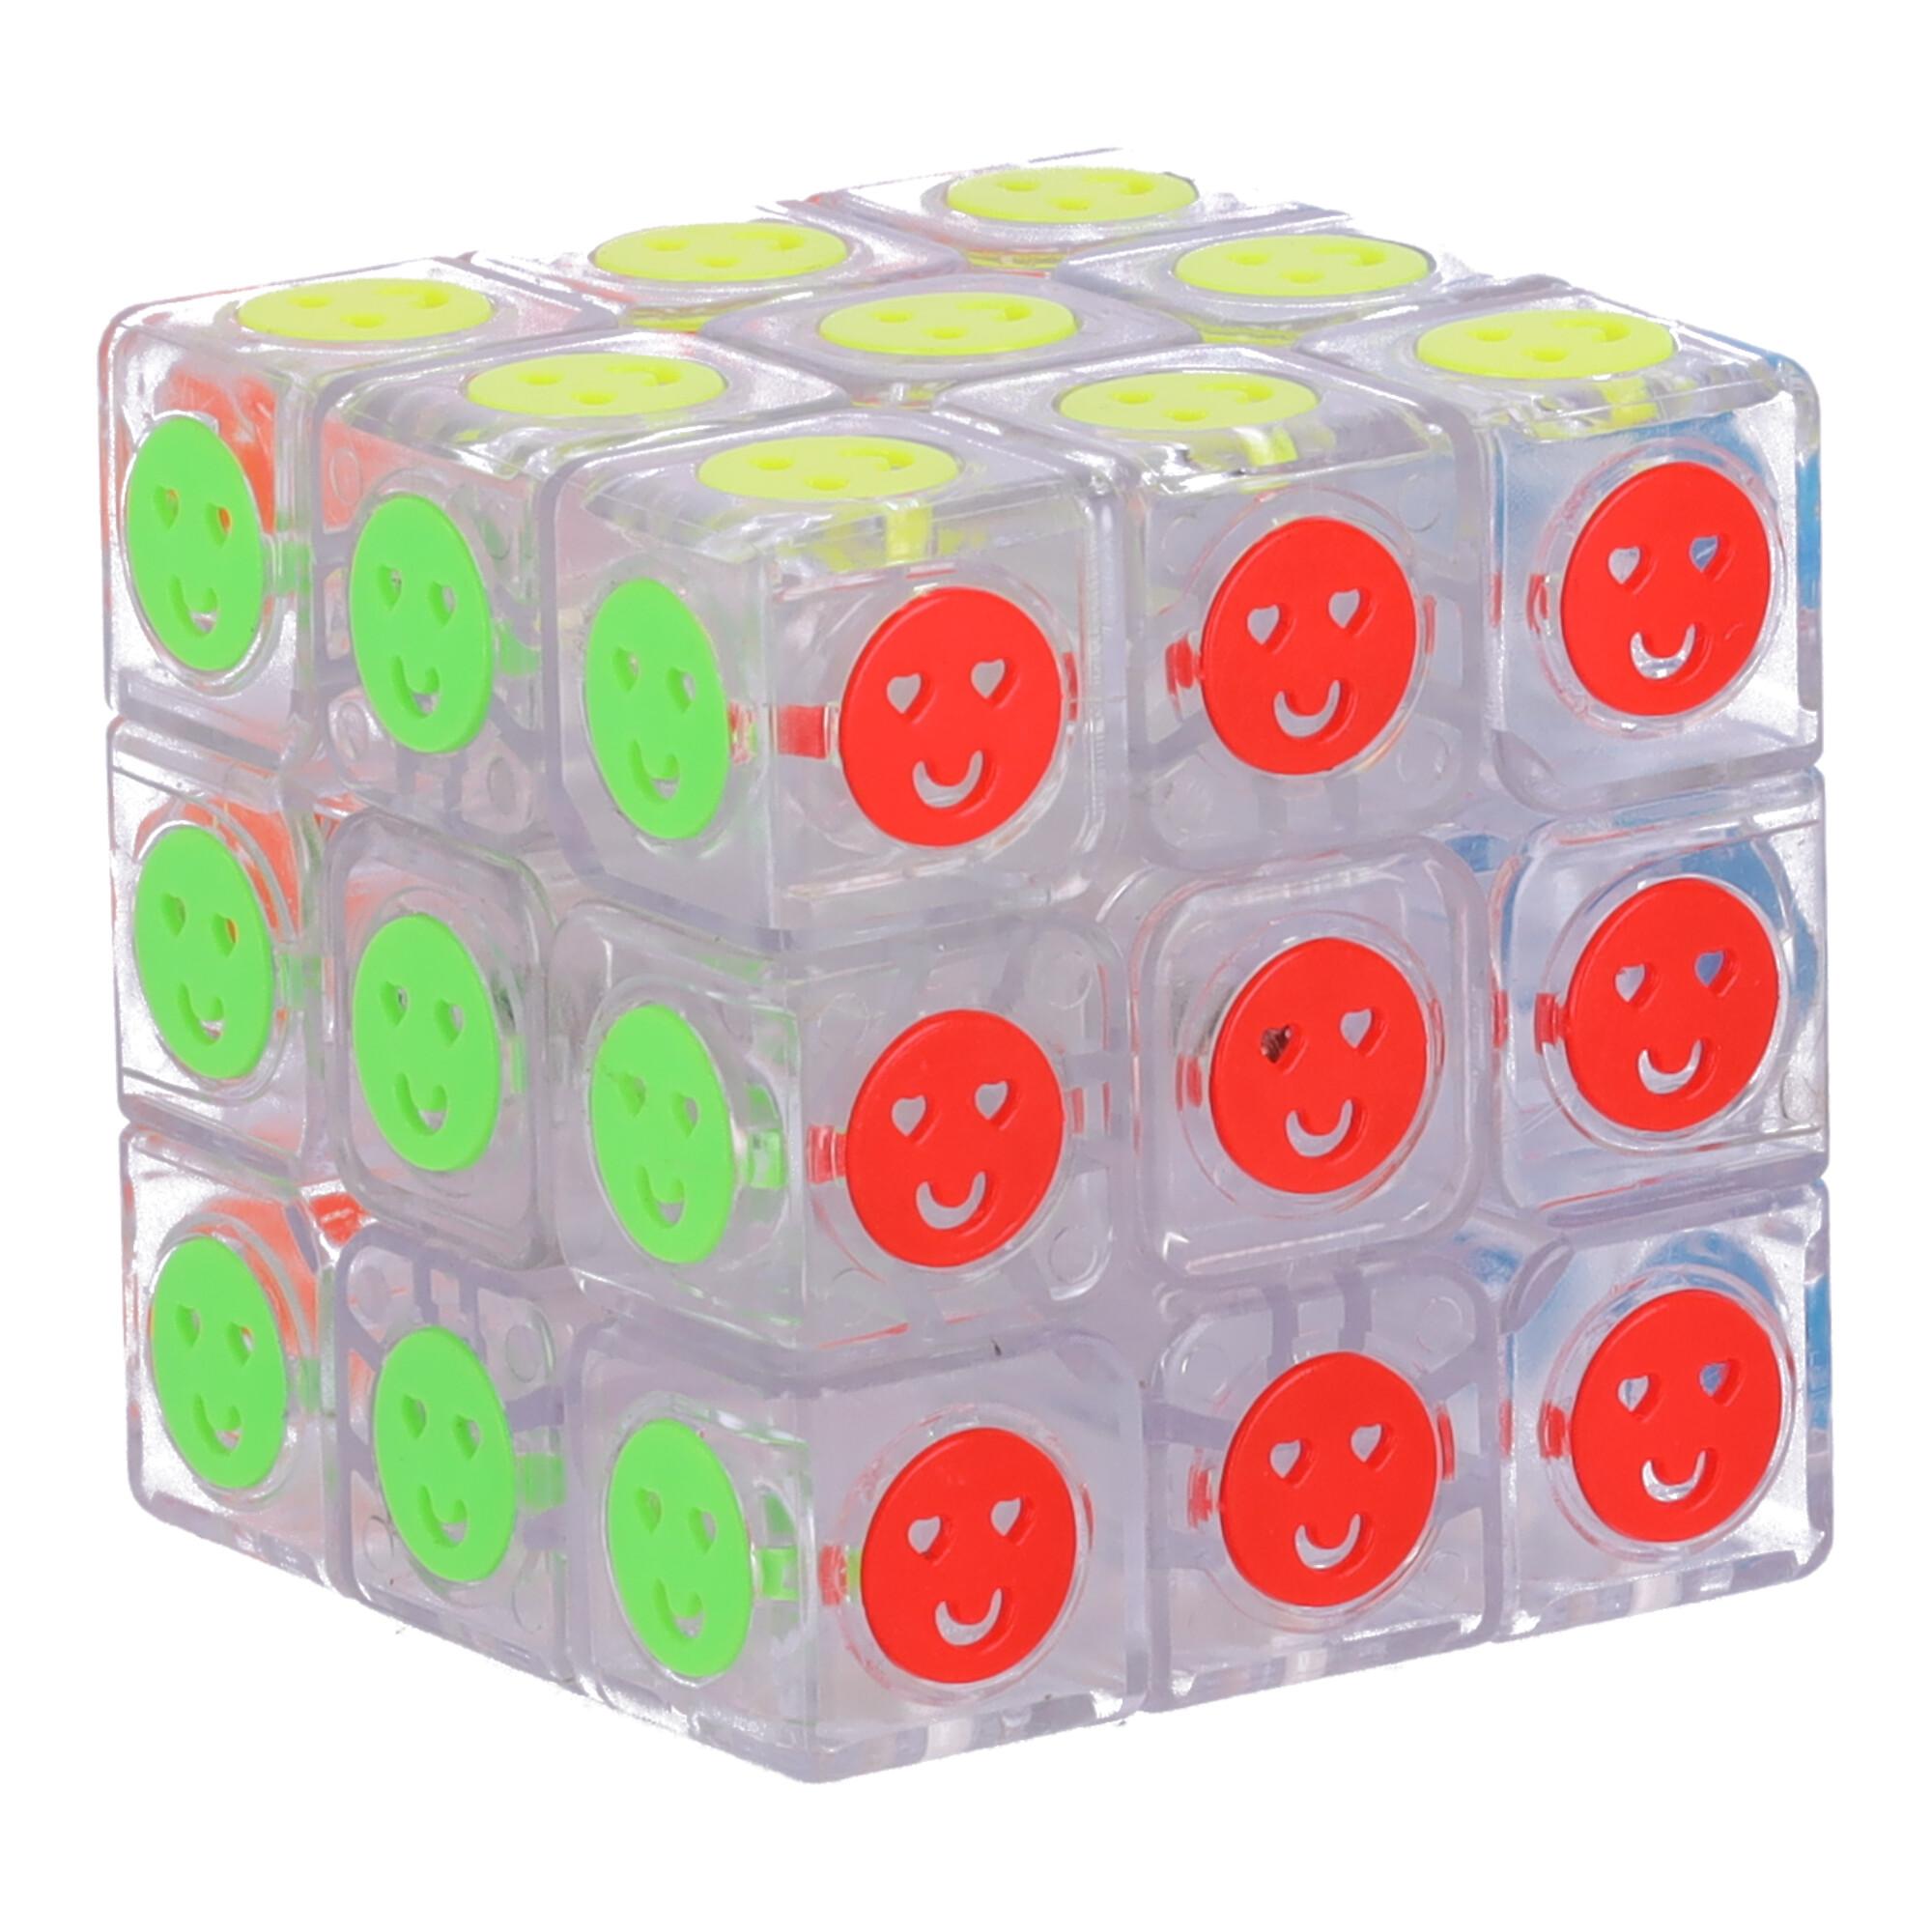 Modern jigsaw puzzle, Rubik's Cube - type II